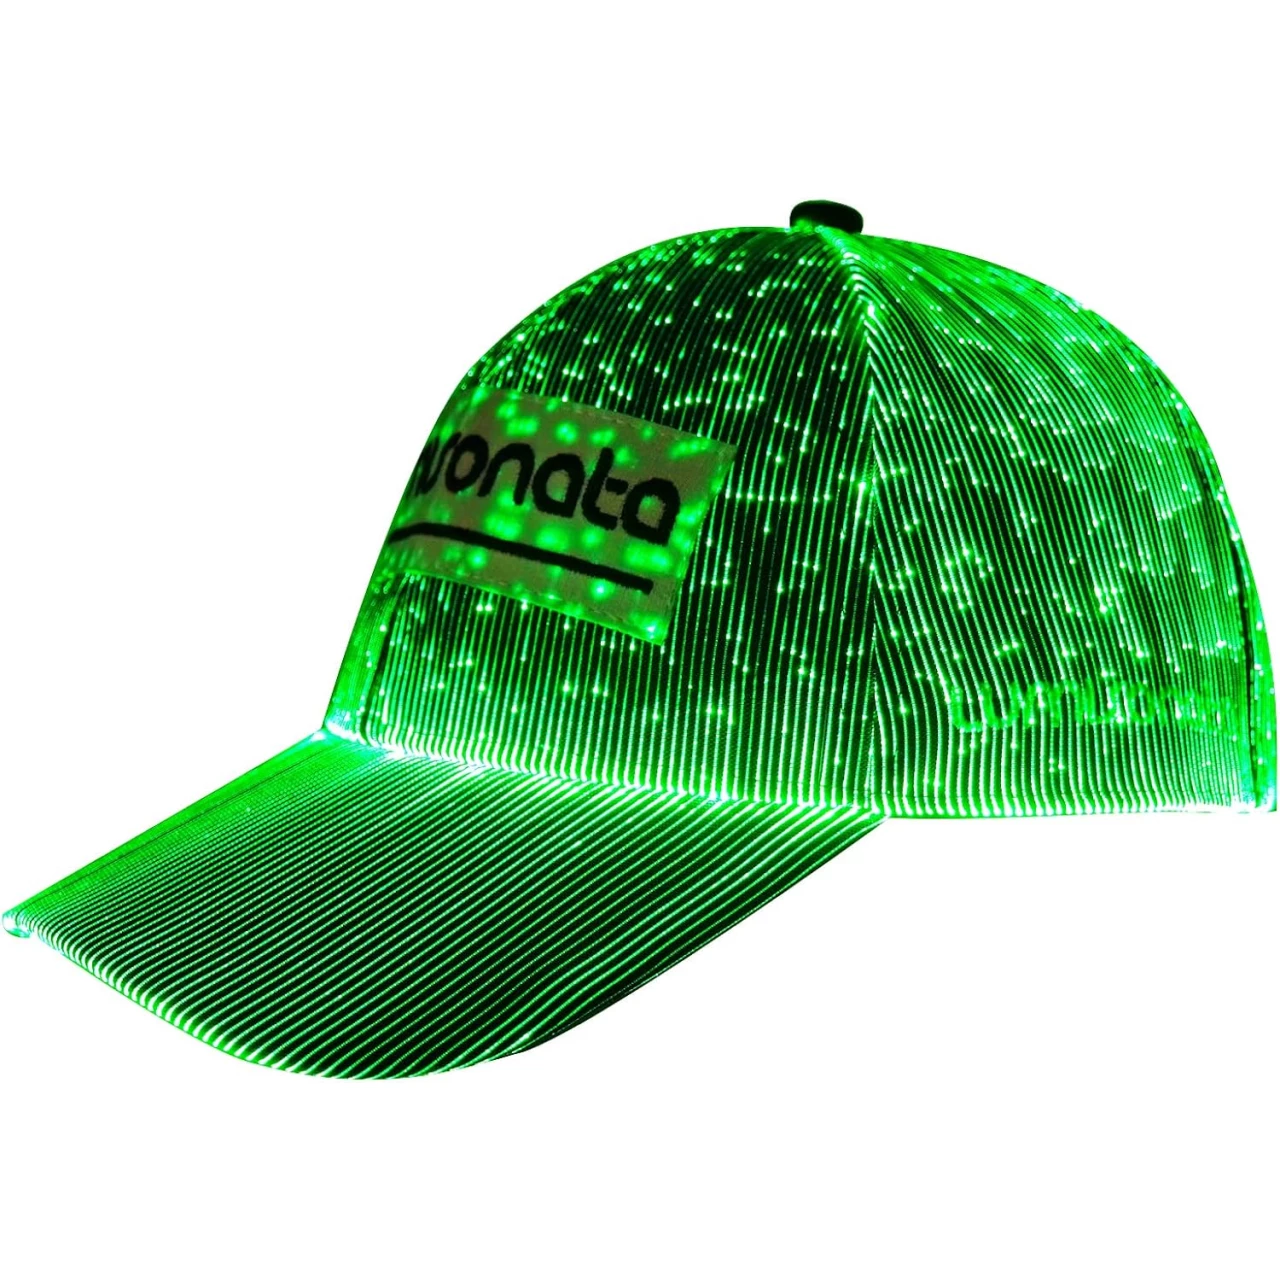 lumisonata LED Cap Fiber Optic Hat EDM Baseball Caps Light Up 7 Colors Glowing USB Charging Hats Rave Accessories for Party